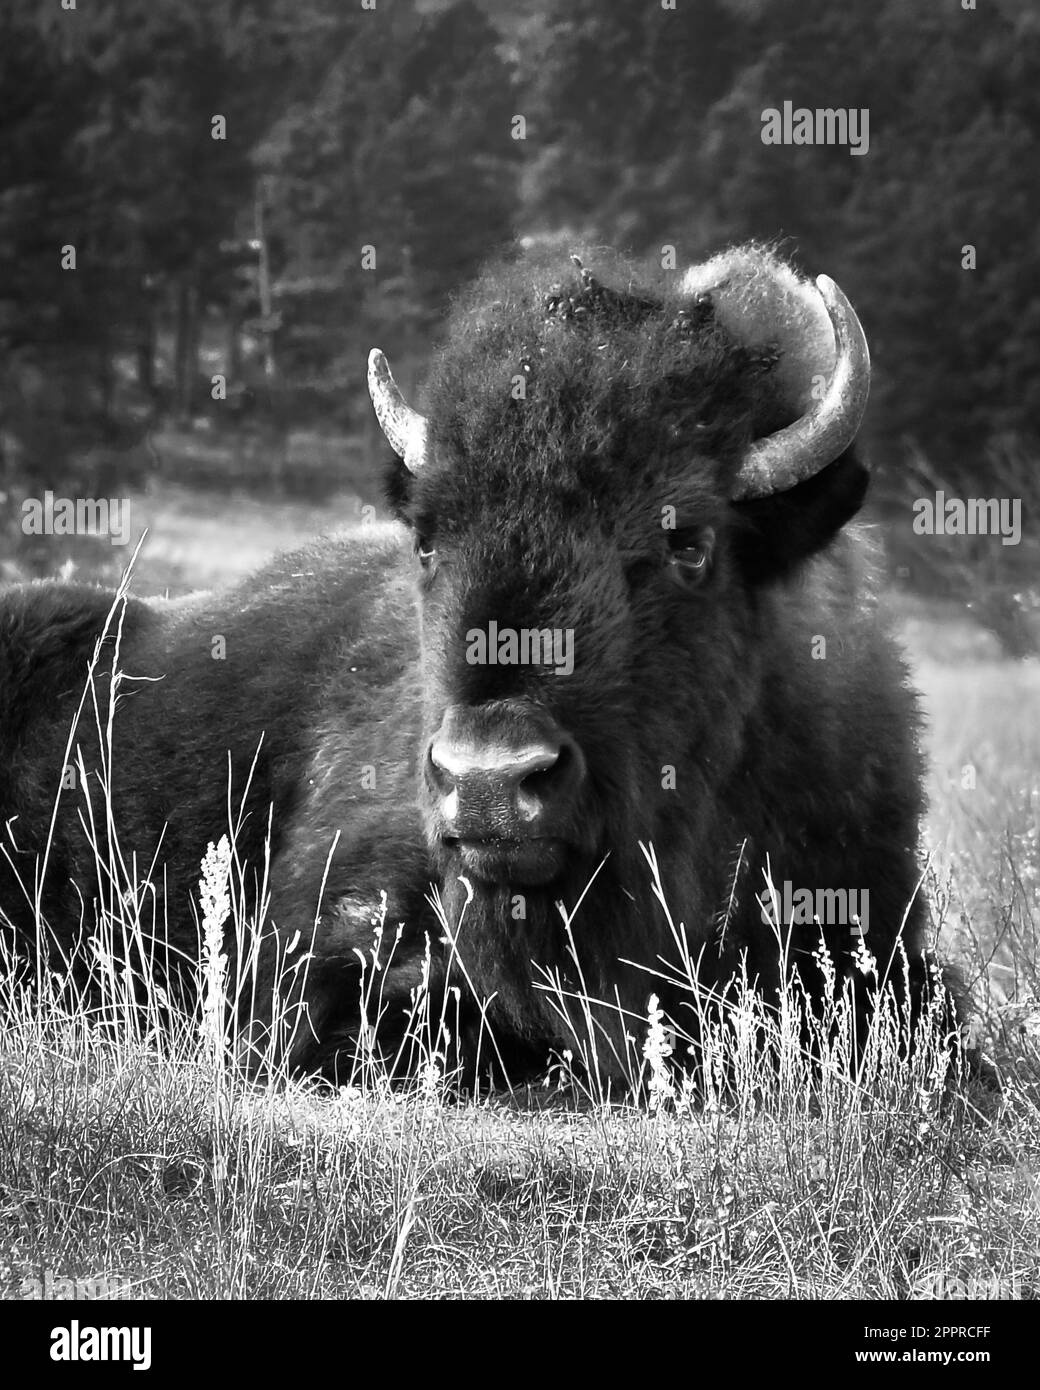 Bisonte americano resing in erba in bianco e nero Foto Stock